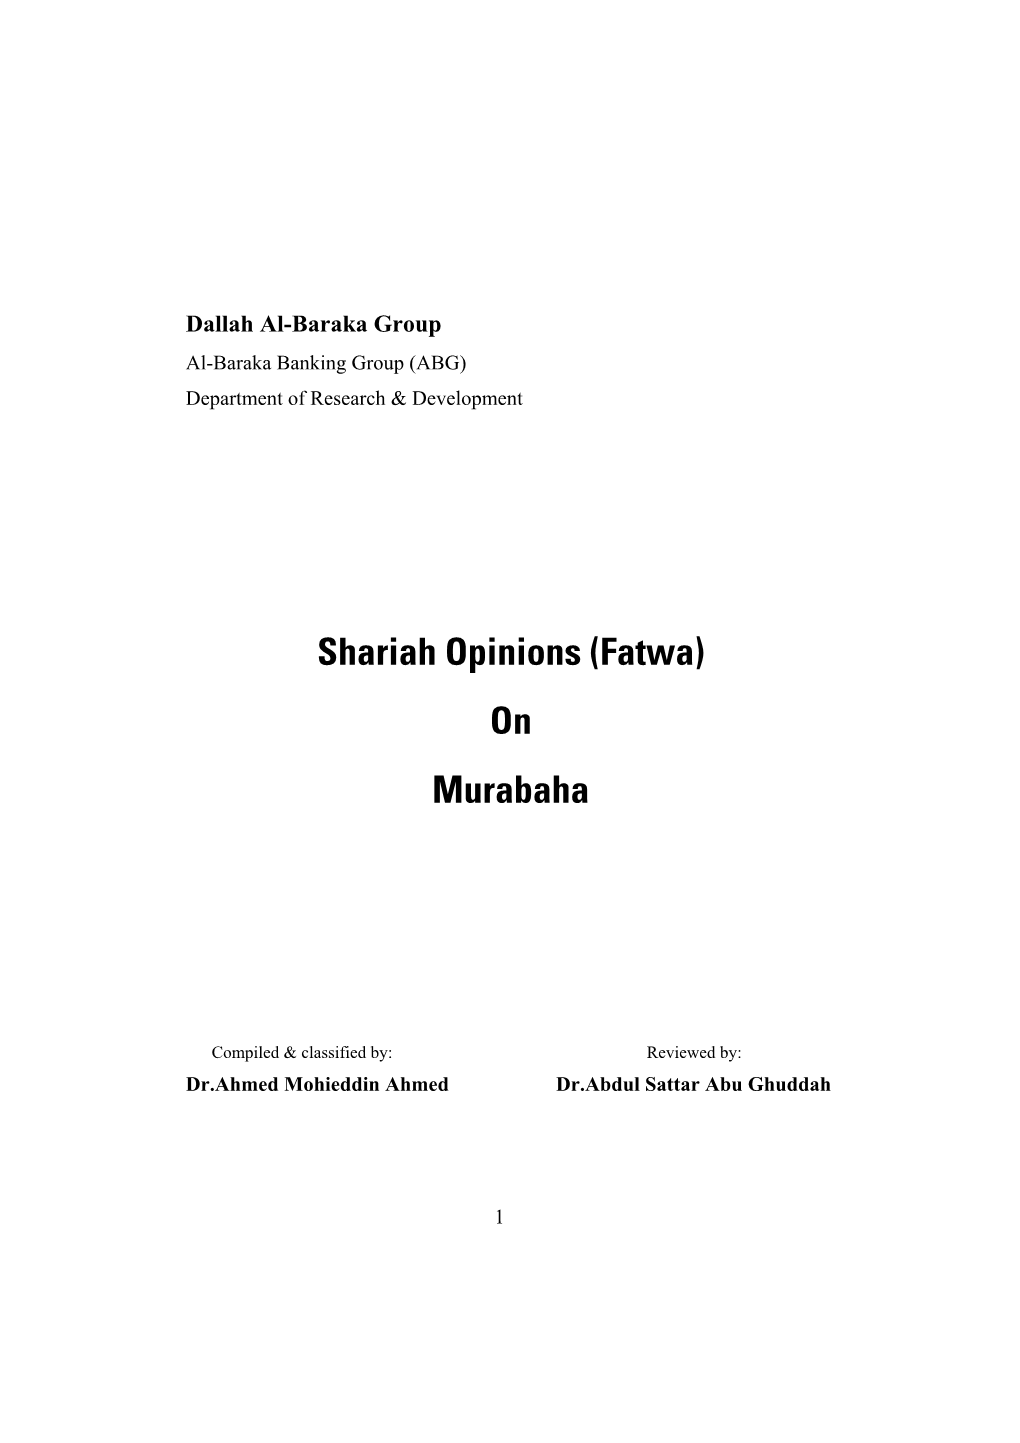 Shariah Opinions (Fatwa) on Murabaha / Al-Baraka Banking Group